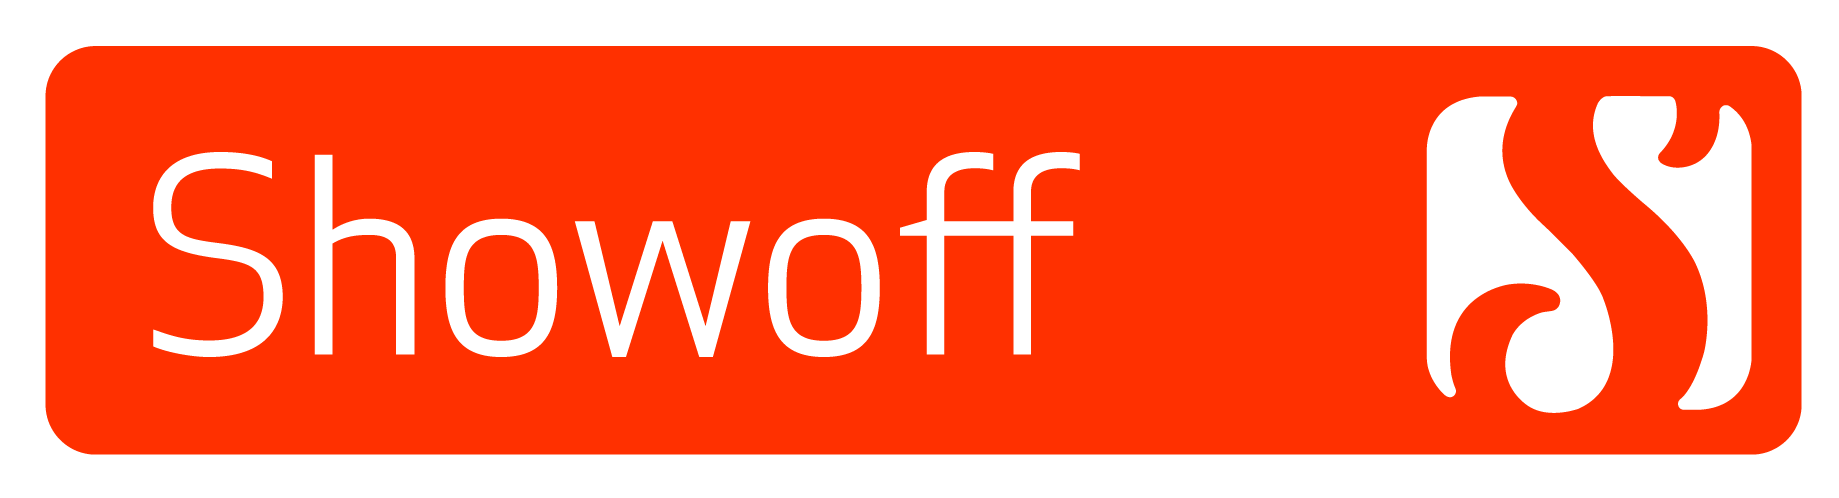 Showoff Logo